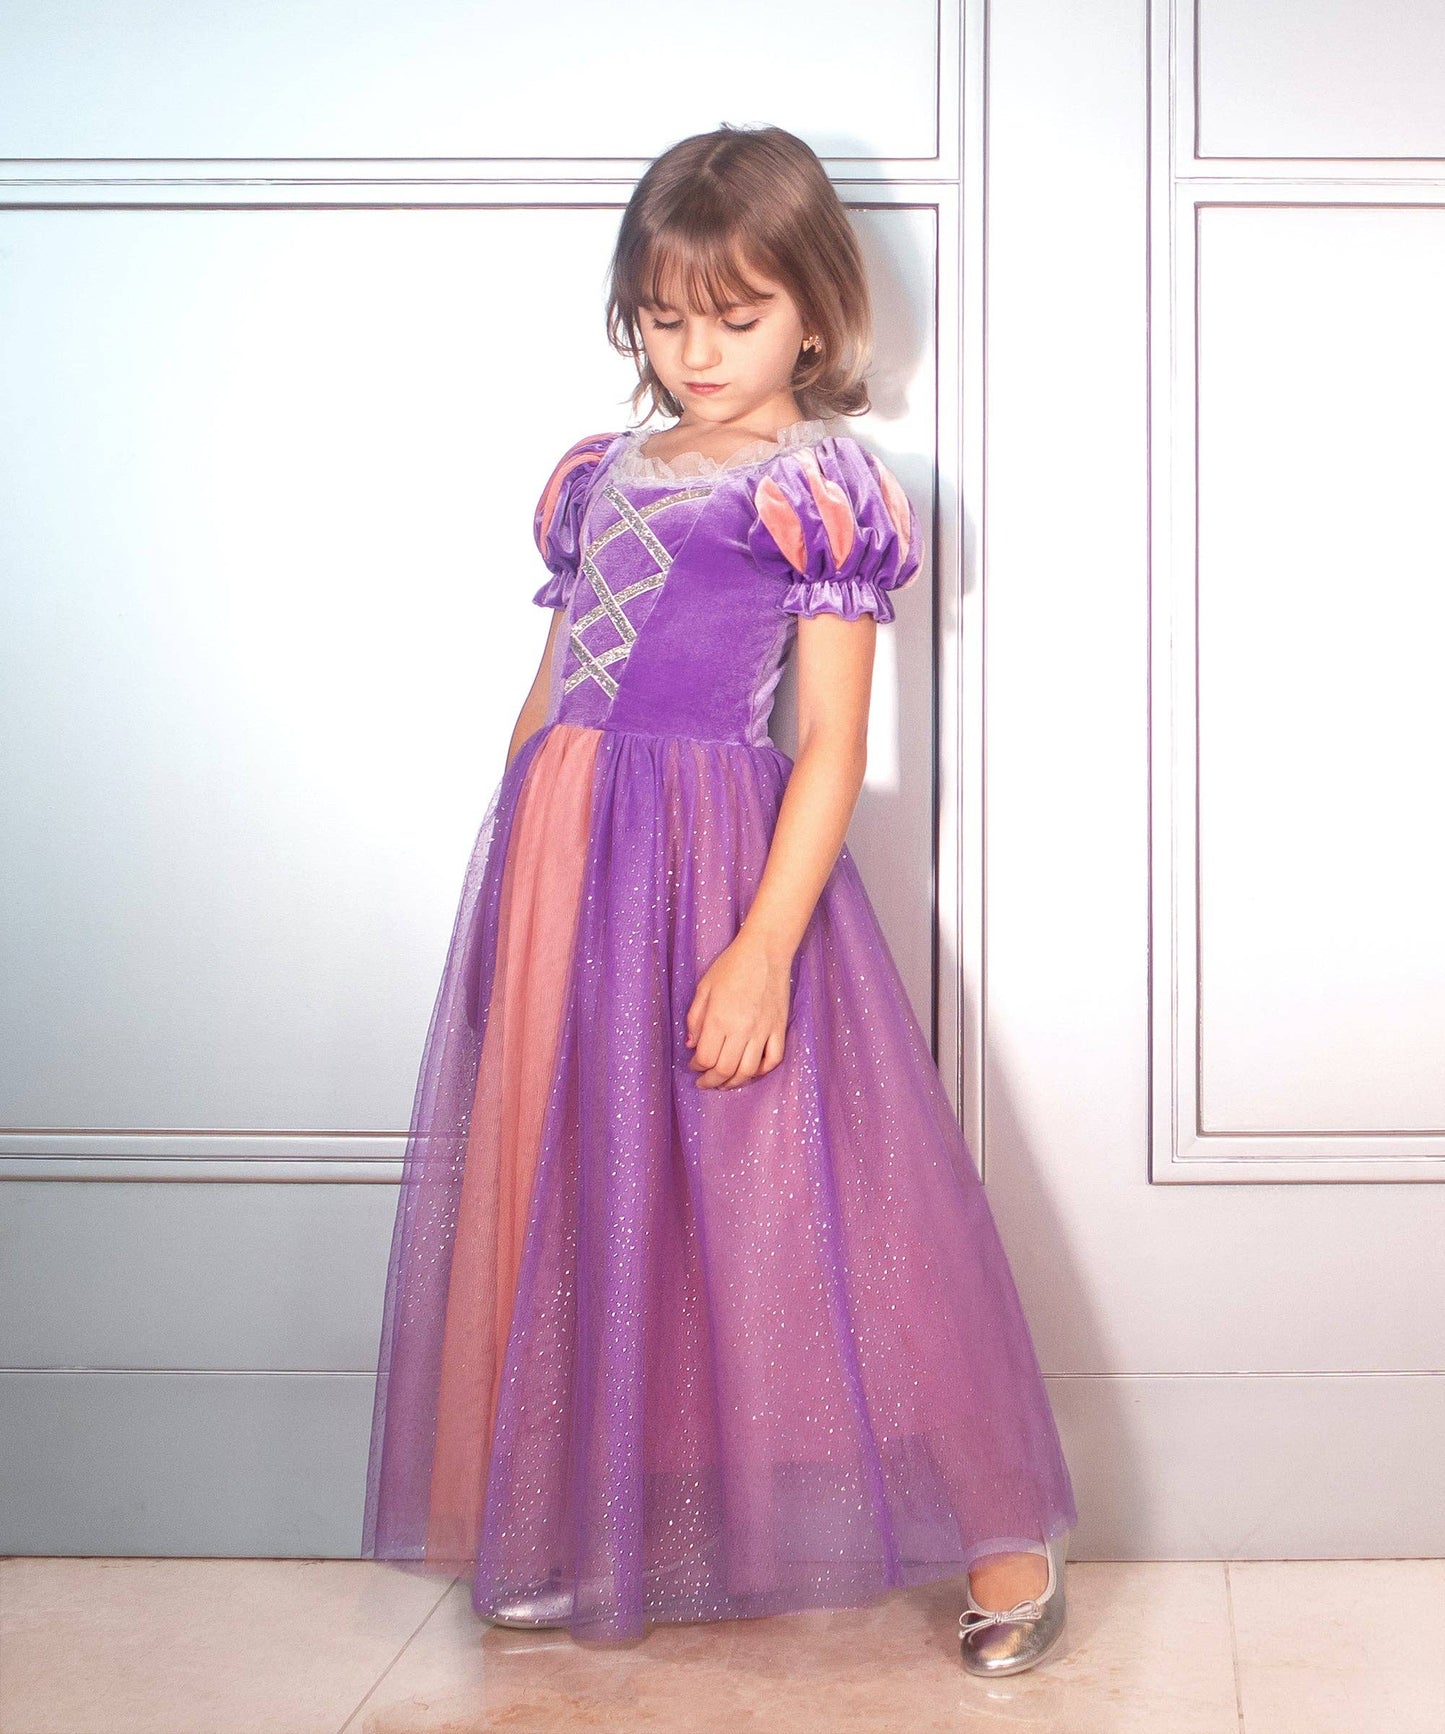 Tower Princess Costume Dress (M)  6-8 years